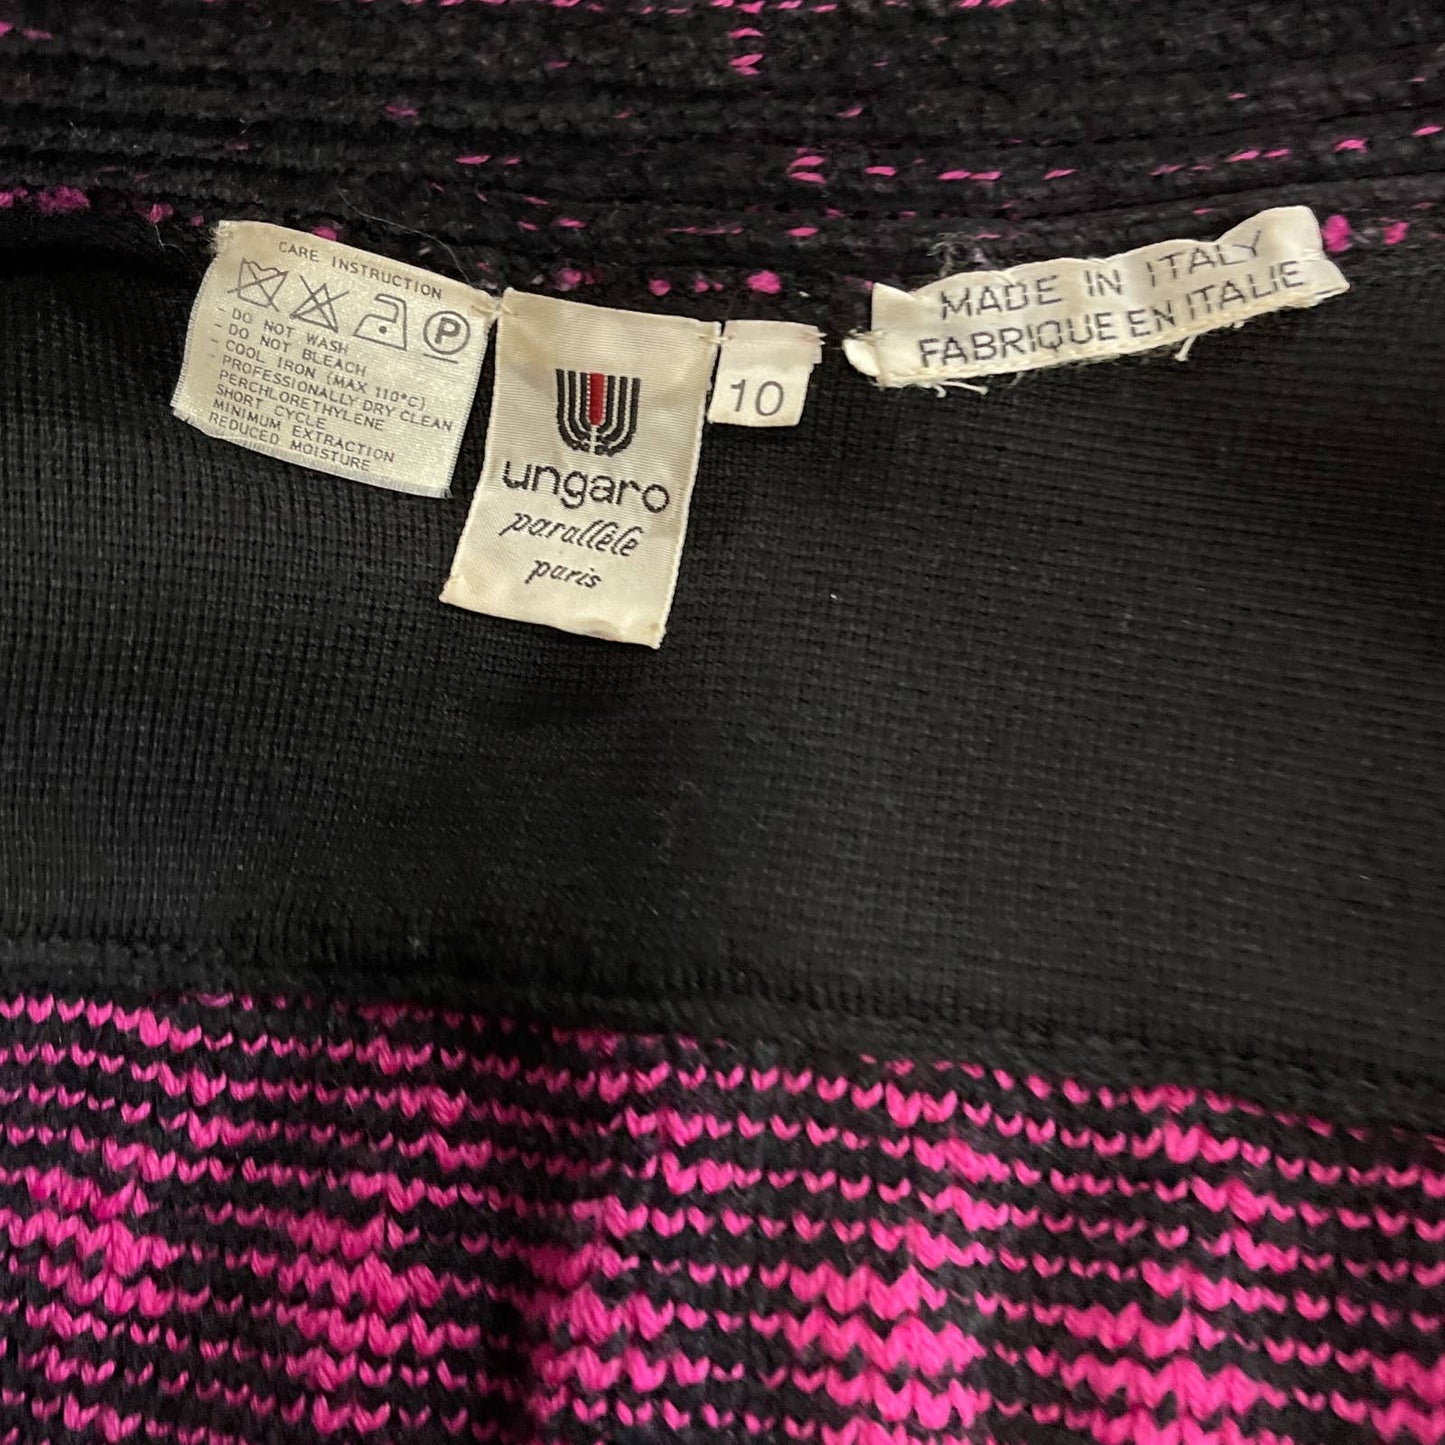 Emanuel Ungaro Parallele Paris | Black & Pink Cardigan Sweater | Sz 10